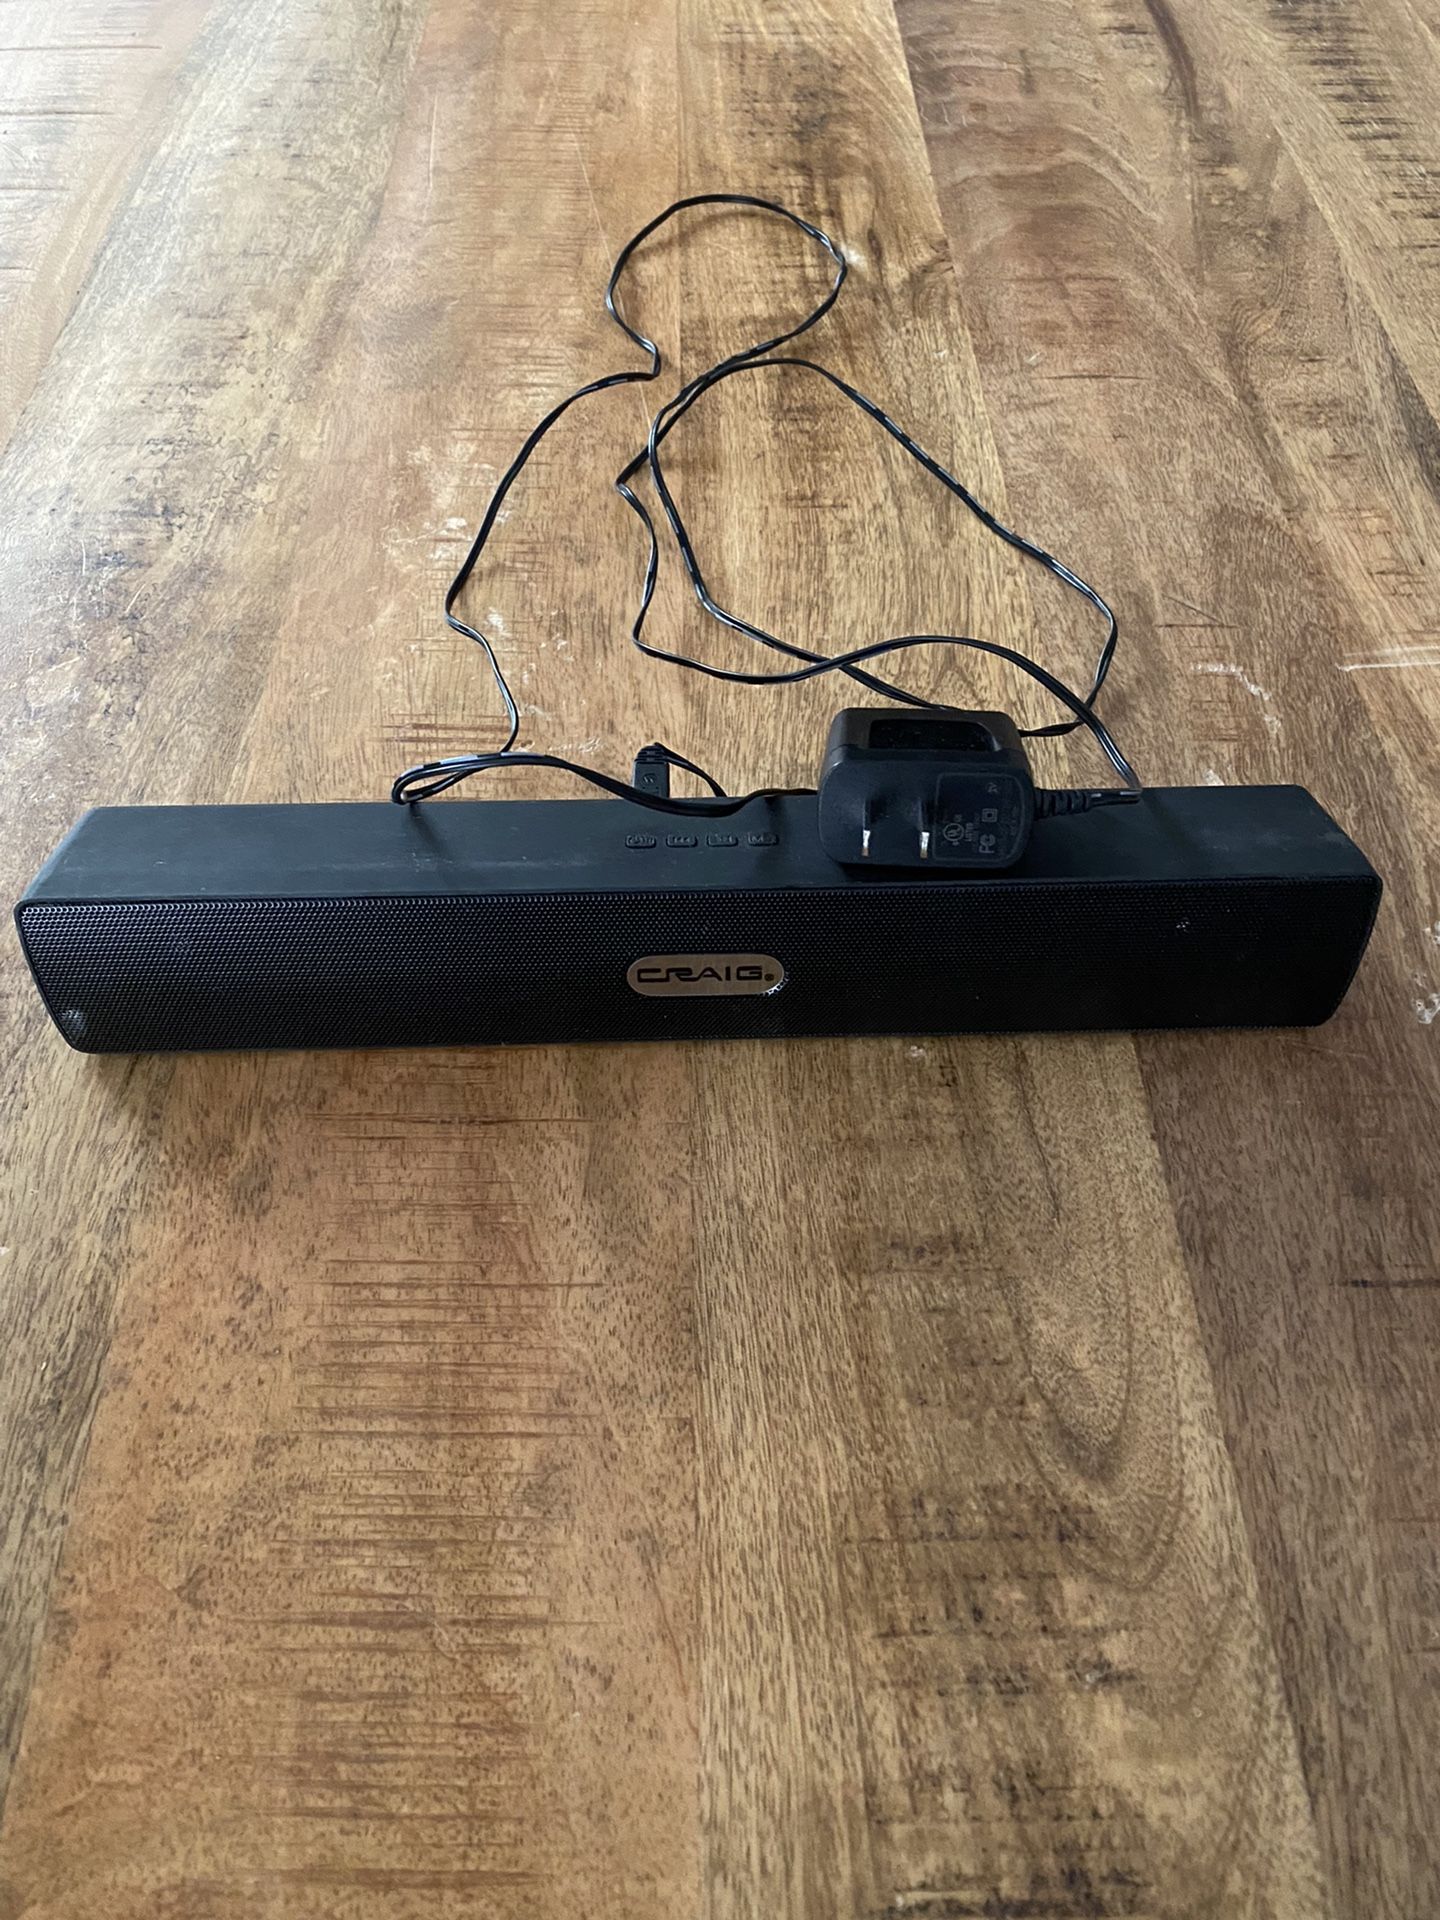 Craig CMA3581 Portable Speaker Bluetooth Wireless  Black